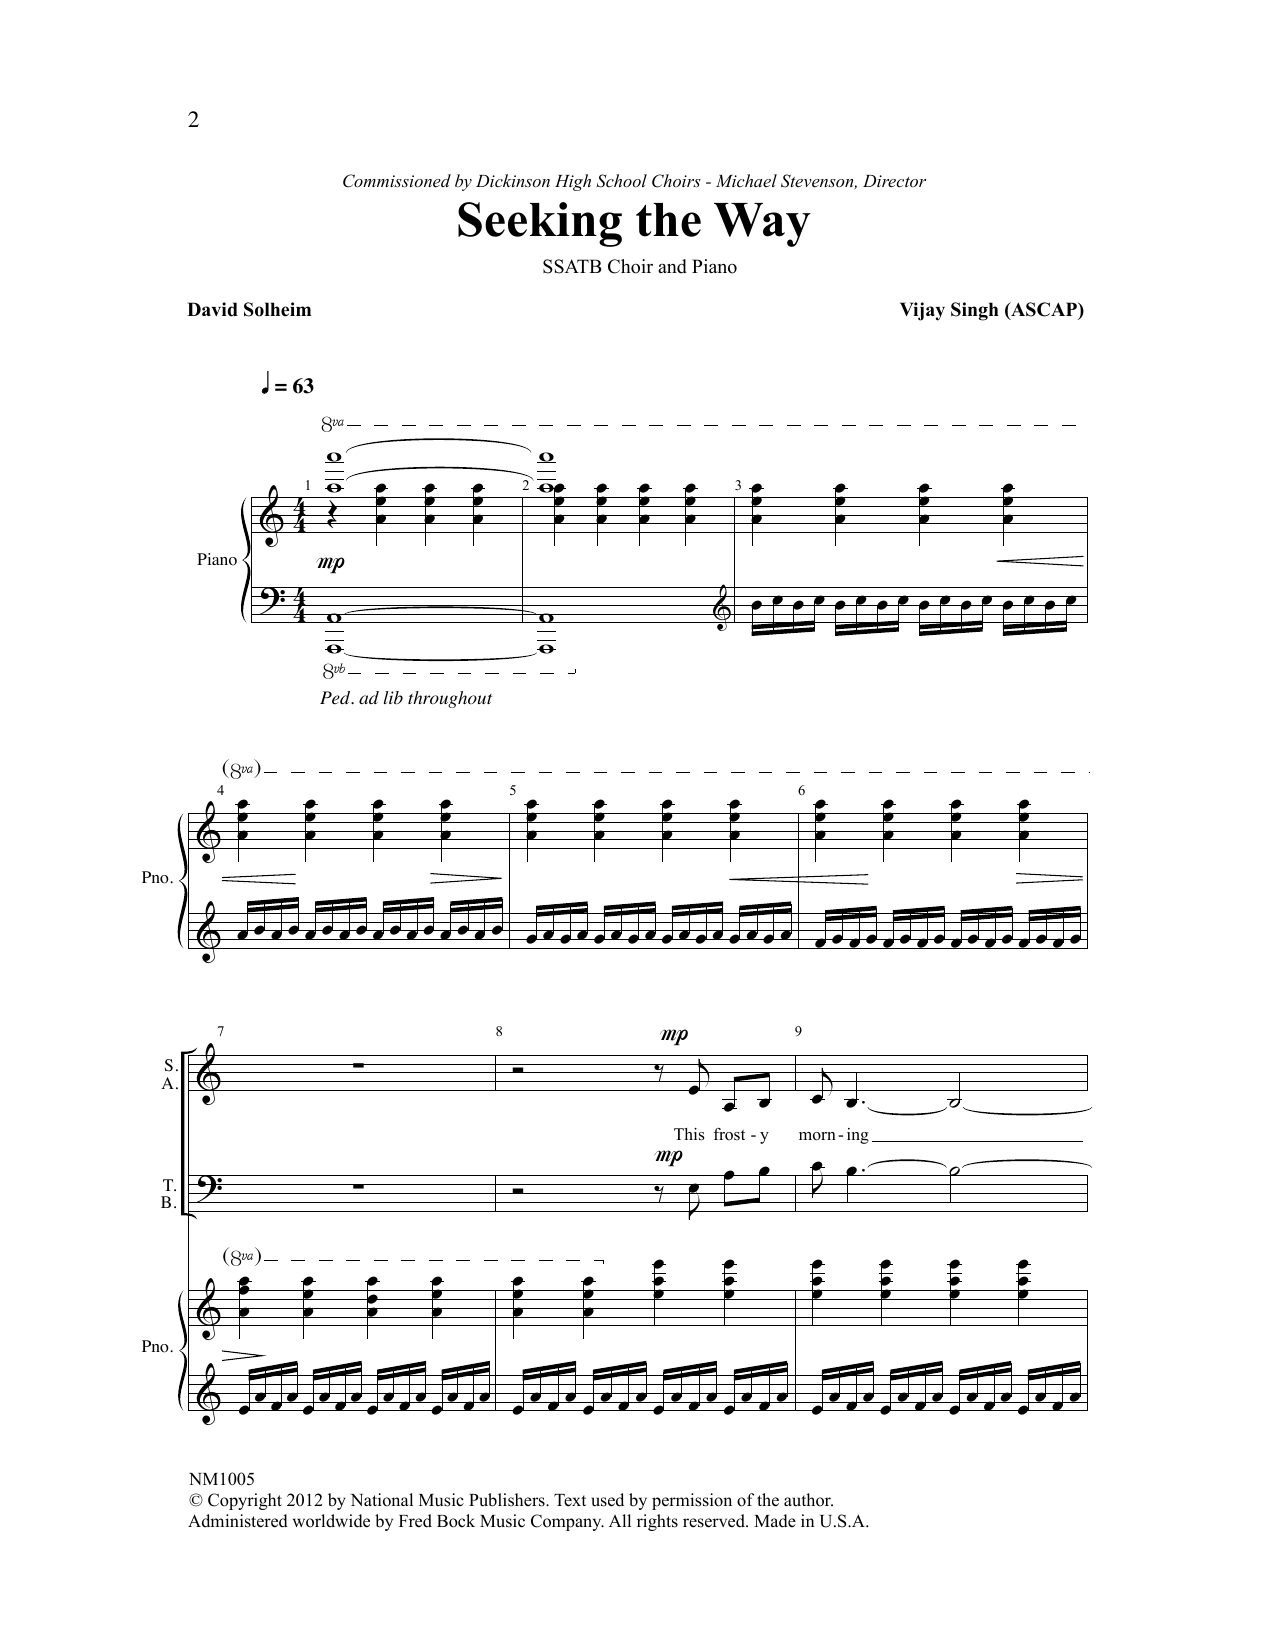 Vijay Singh Seeking The Way Sheet Music Notes & Chords for SATB Choir - Download or Print PDF